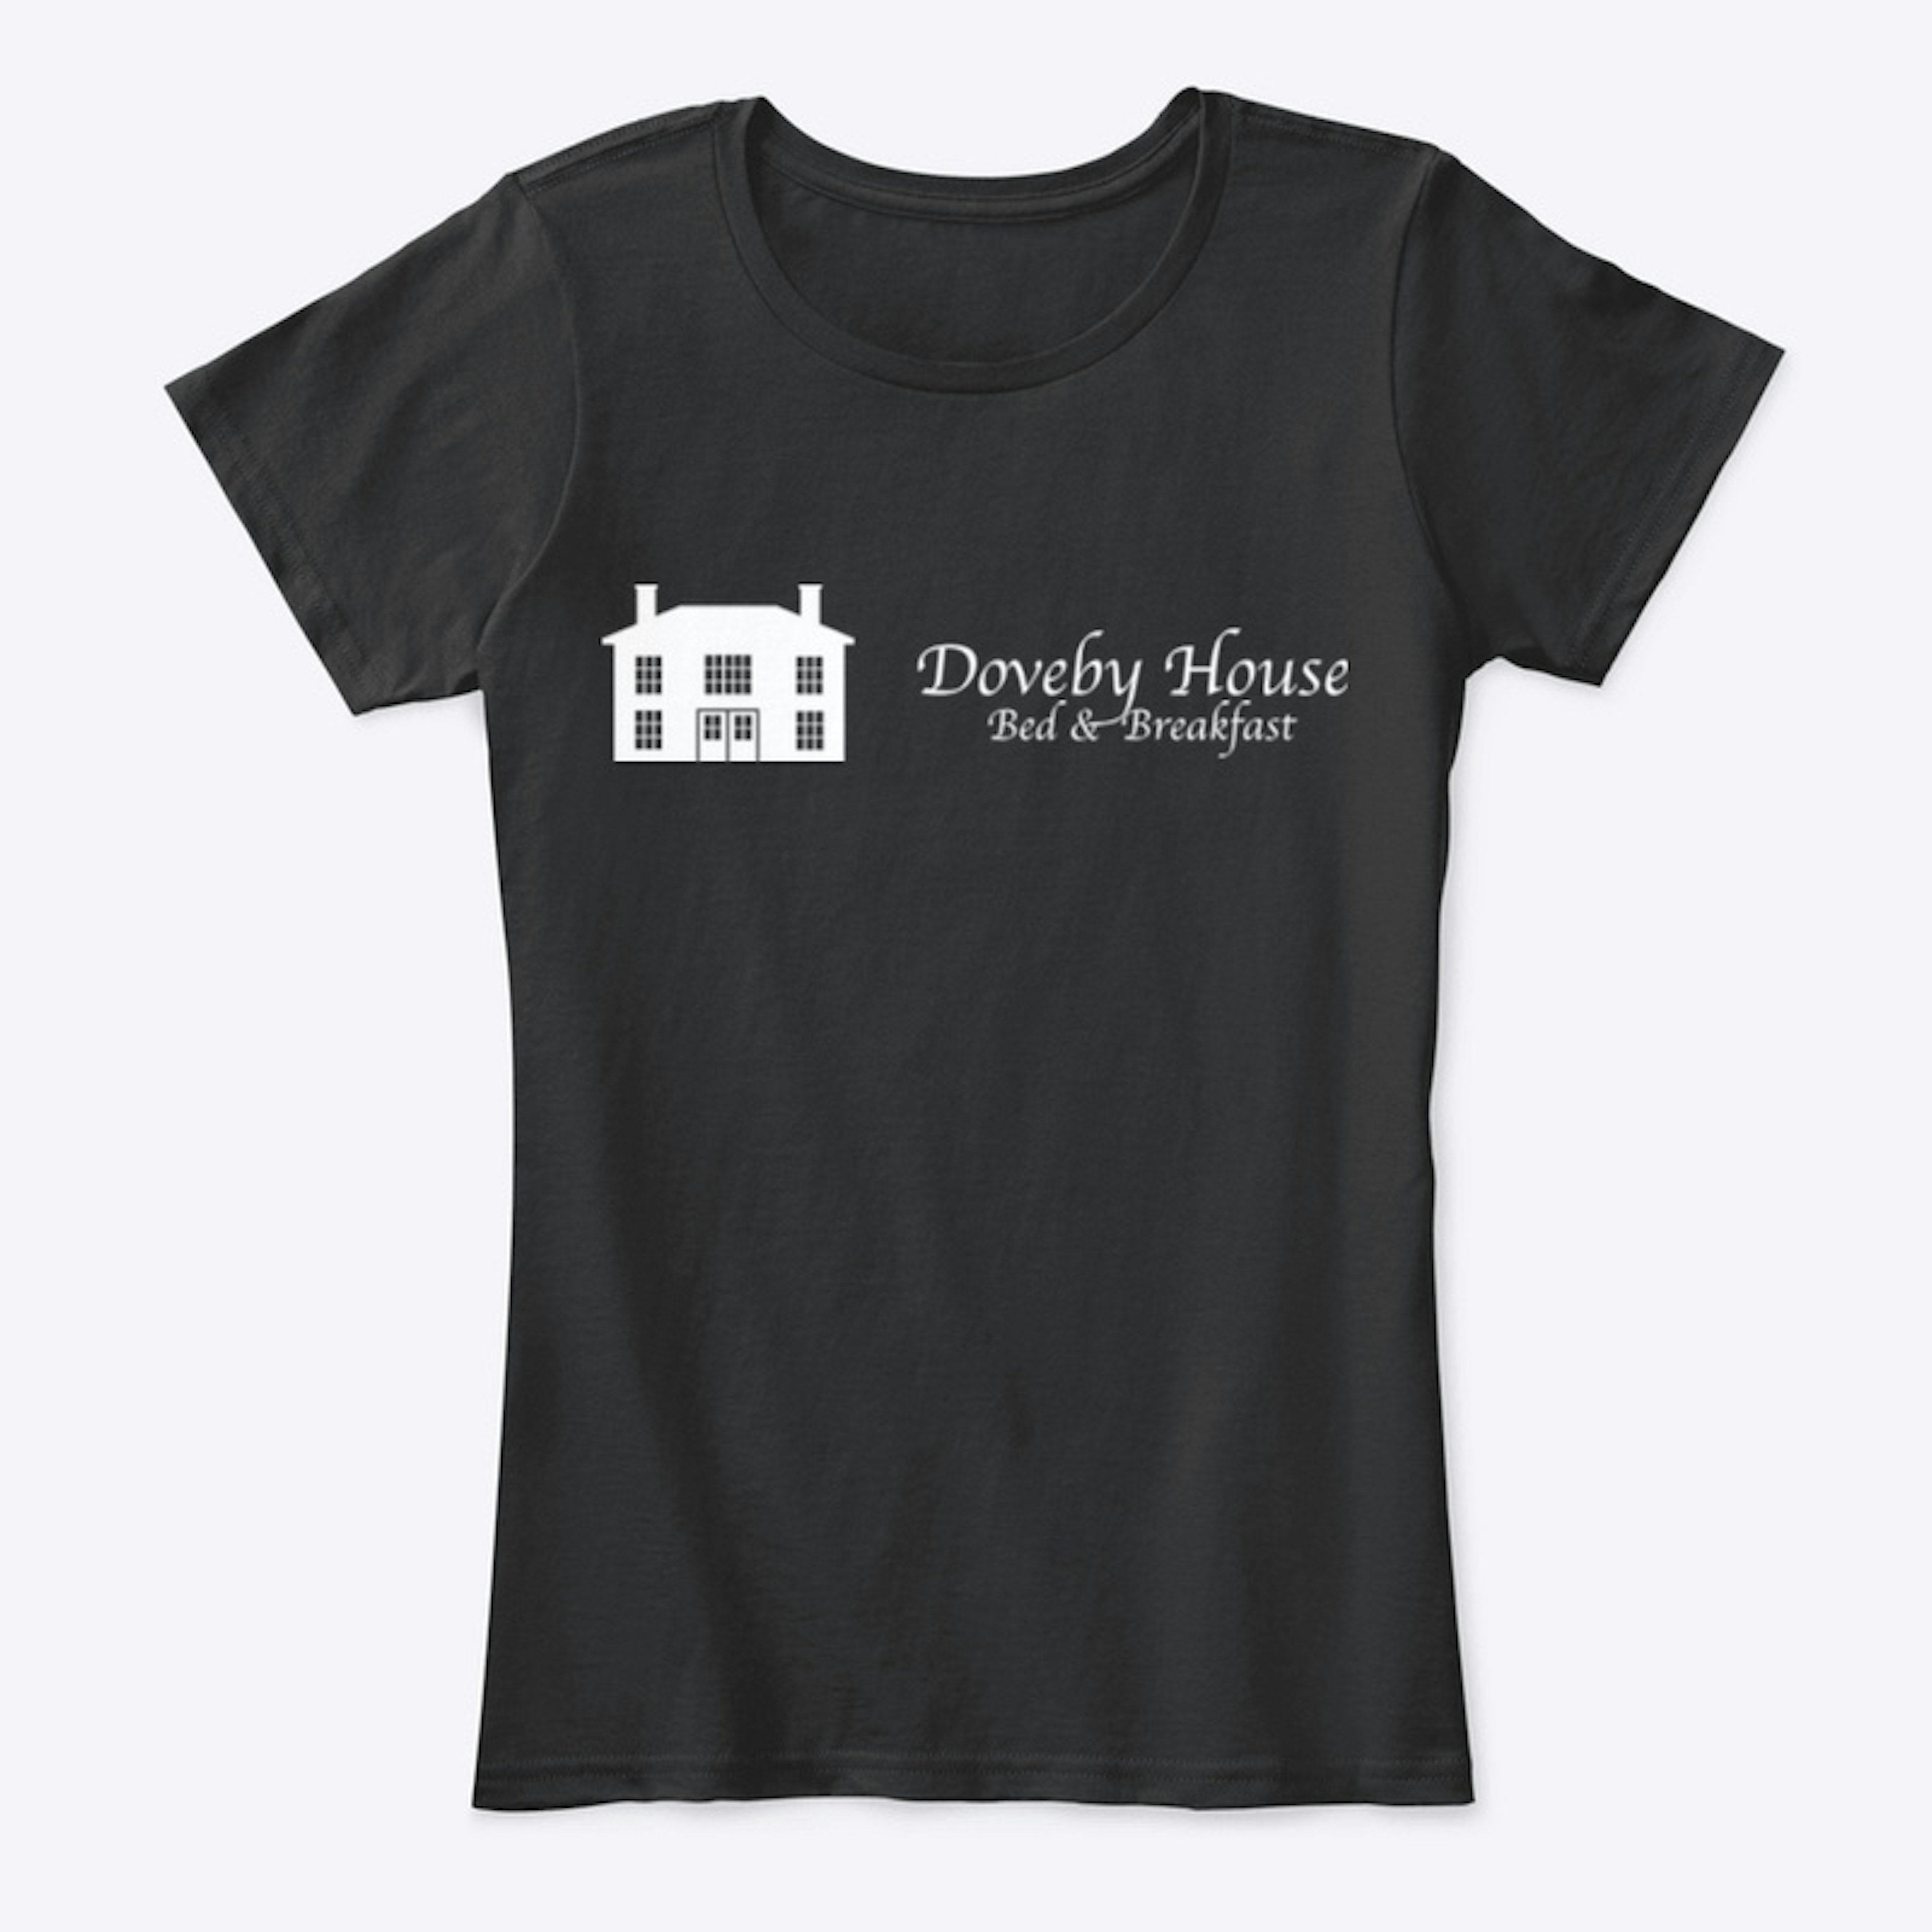 Doveby House - new design - white